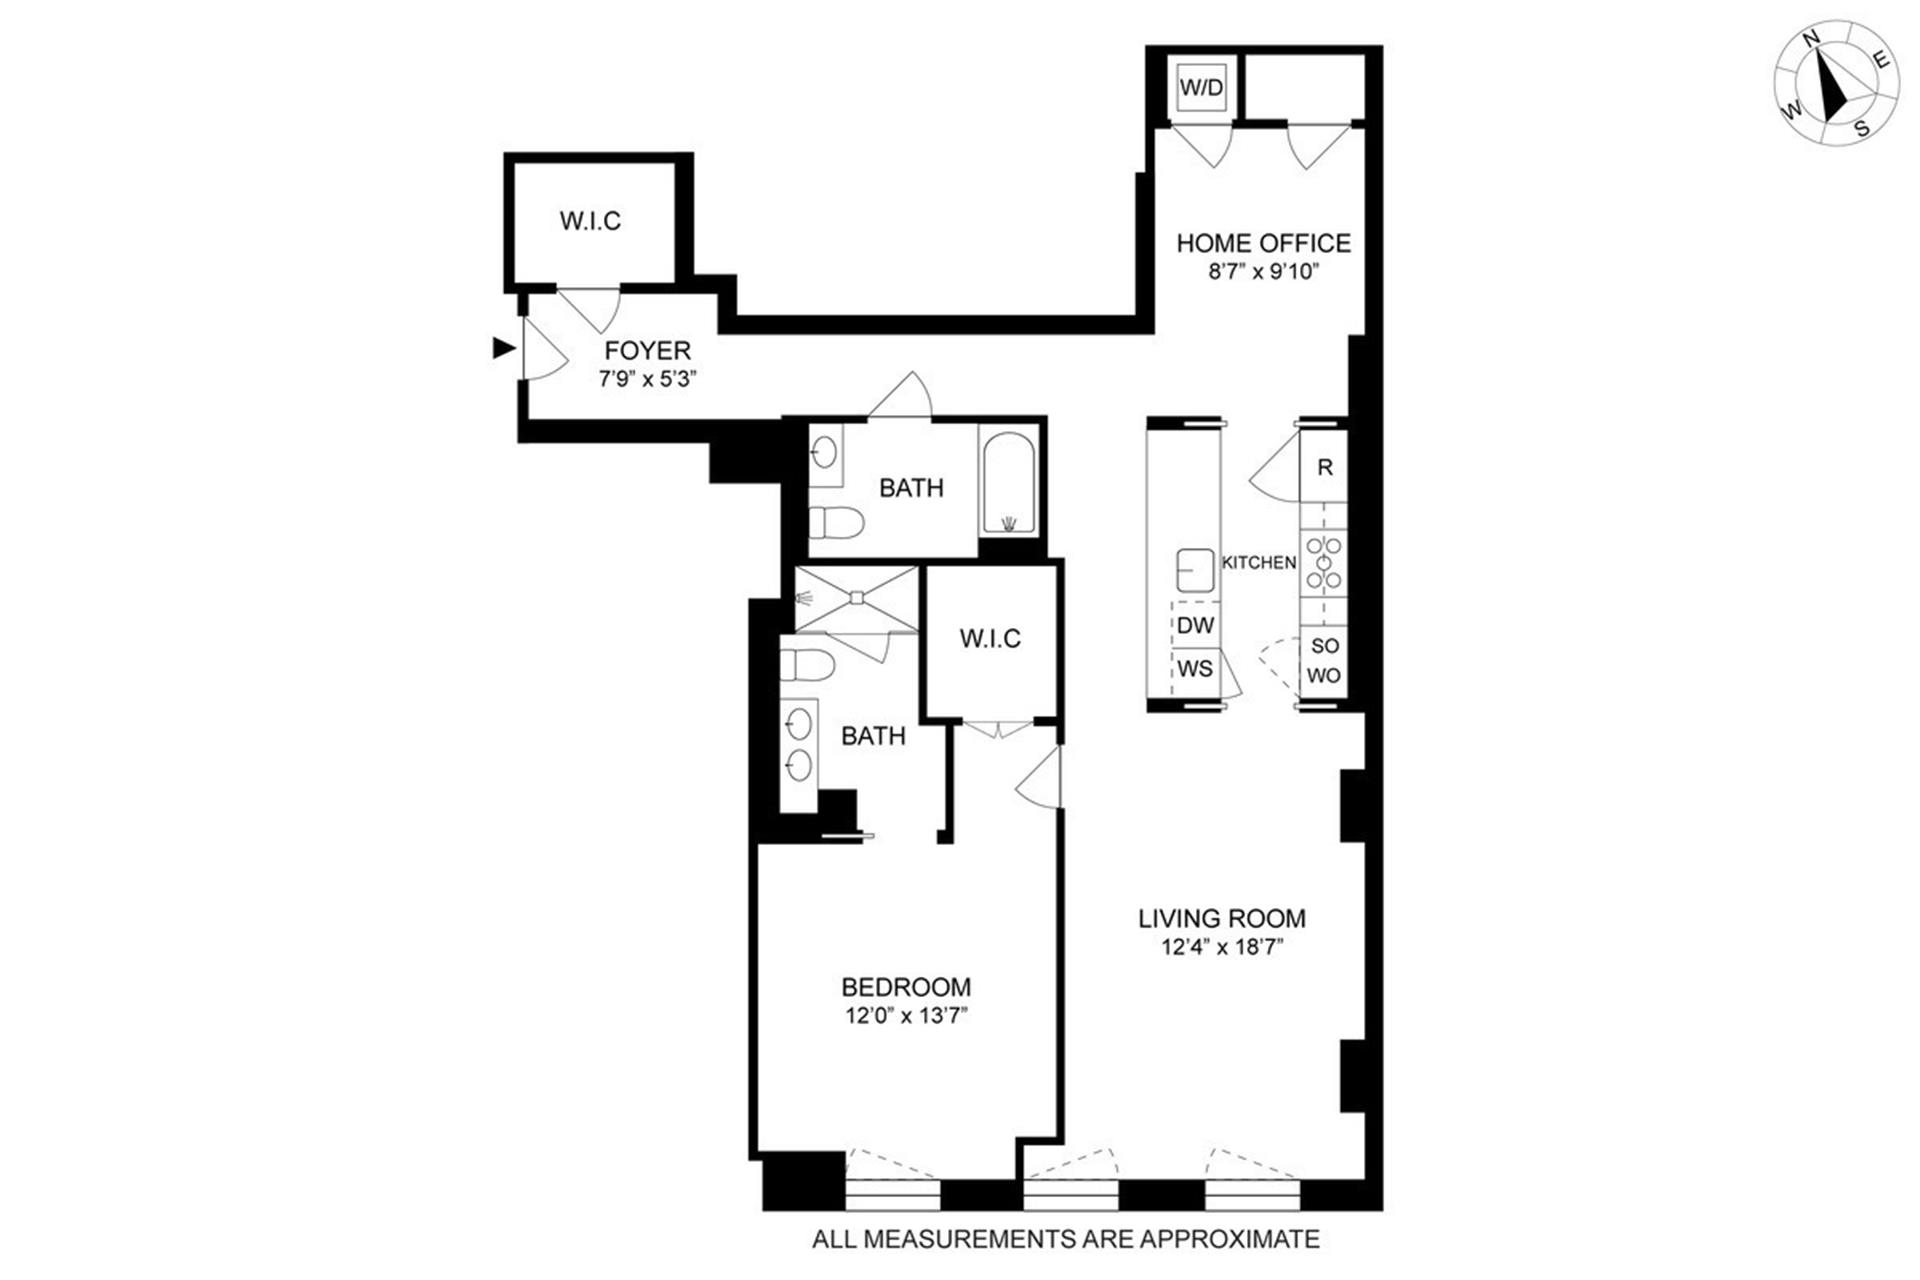 Floorplan for 242 Broome Street, 5A